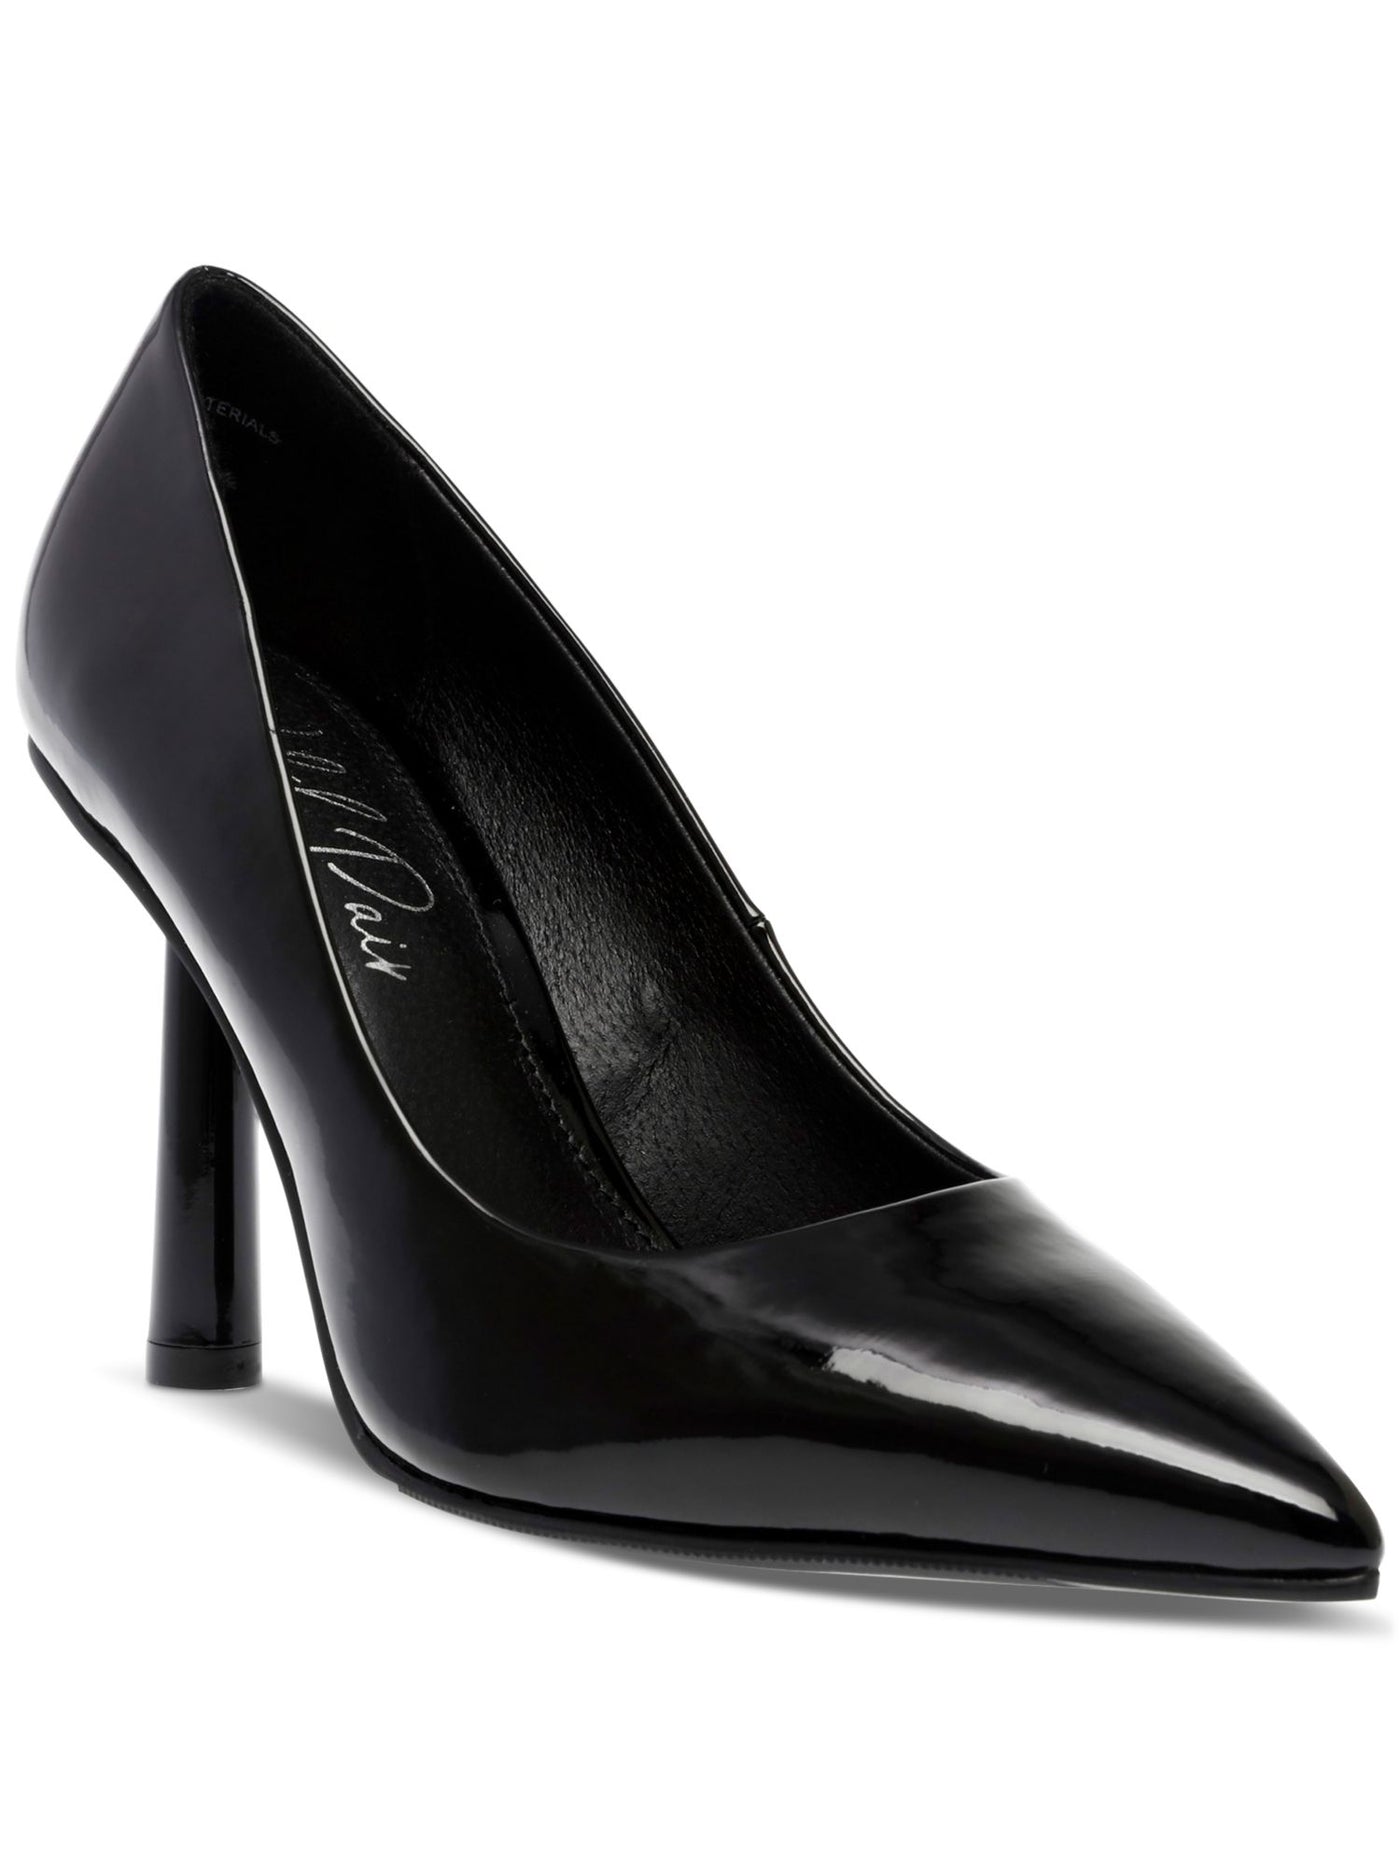 WILD PAIR Womens Black Slip Resistant Comfort Taraa Pointed Toe Stiletto Slip On Pumps Shoes 7 M